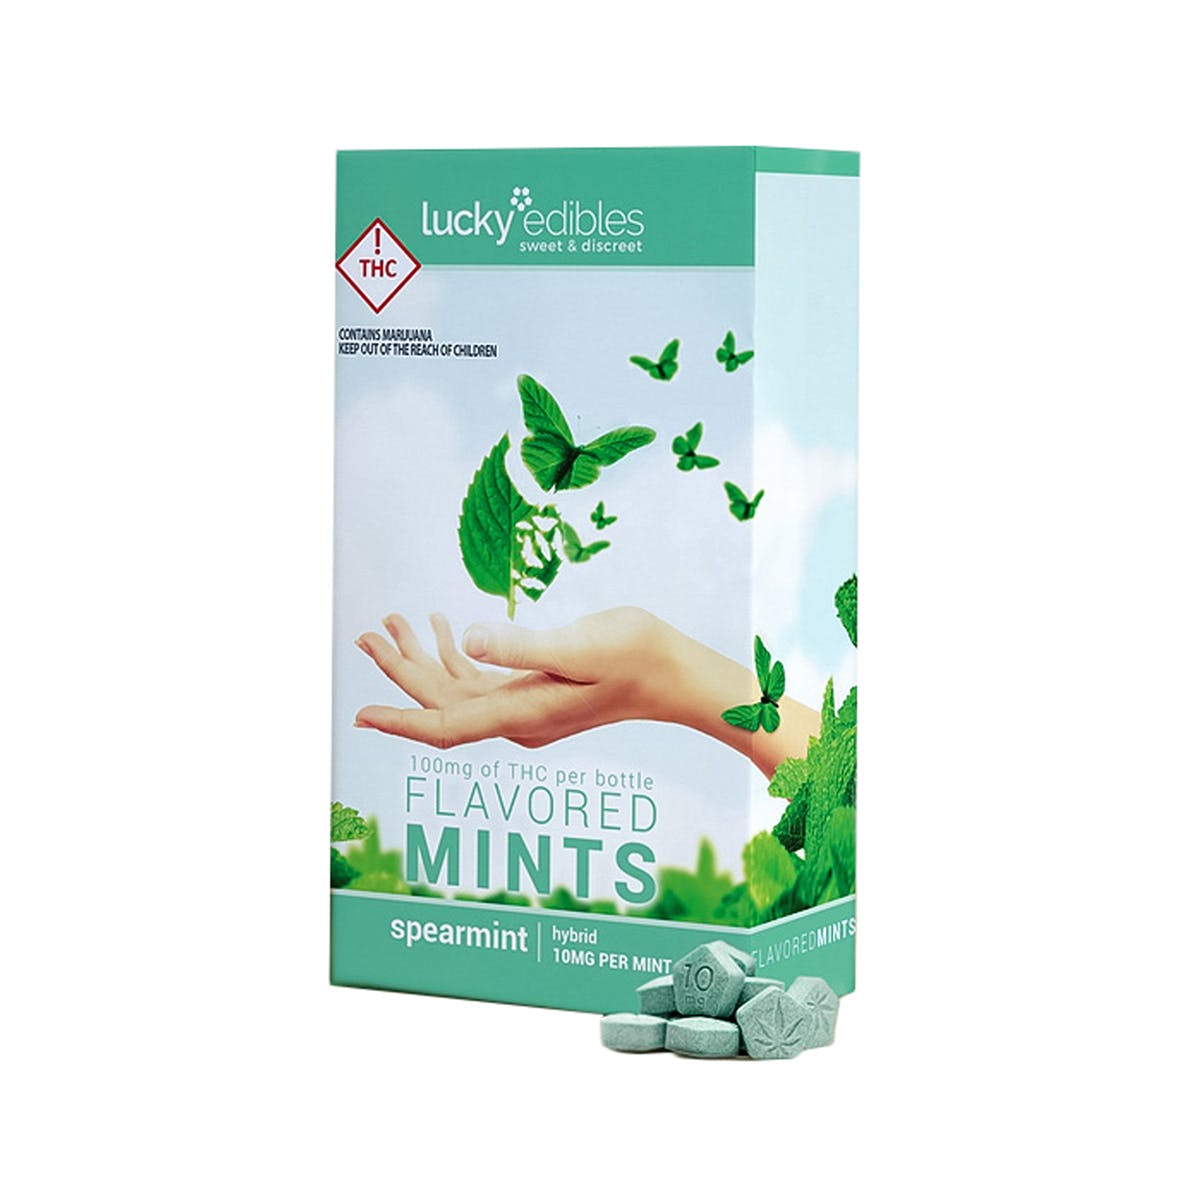 marijuana-dispensaries-euflora-3d-in-denver-lucky-edibles-spearmint-mints-100mg